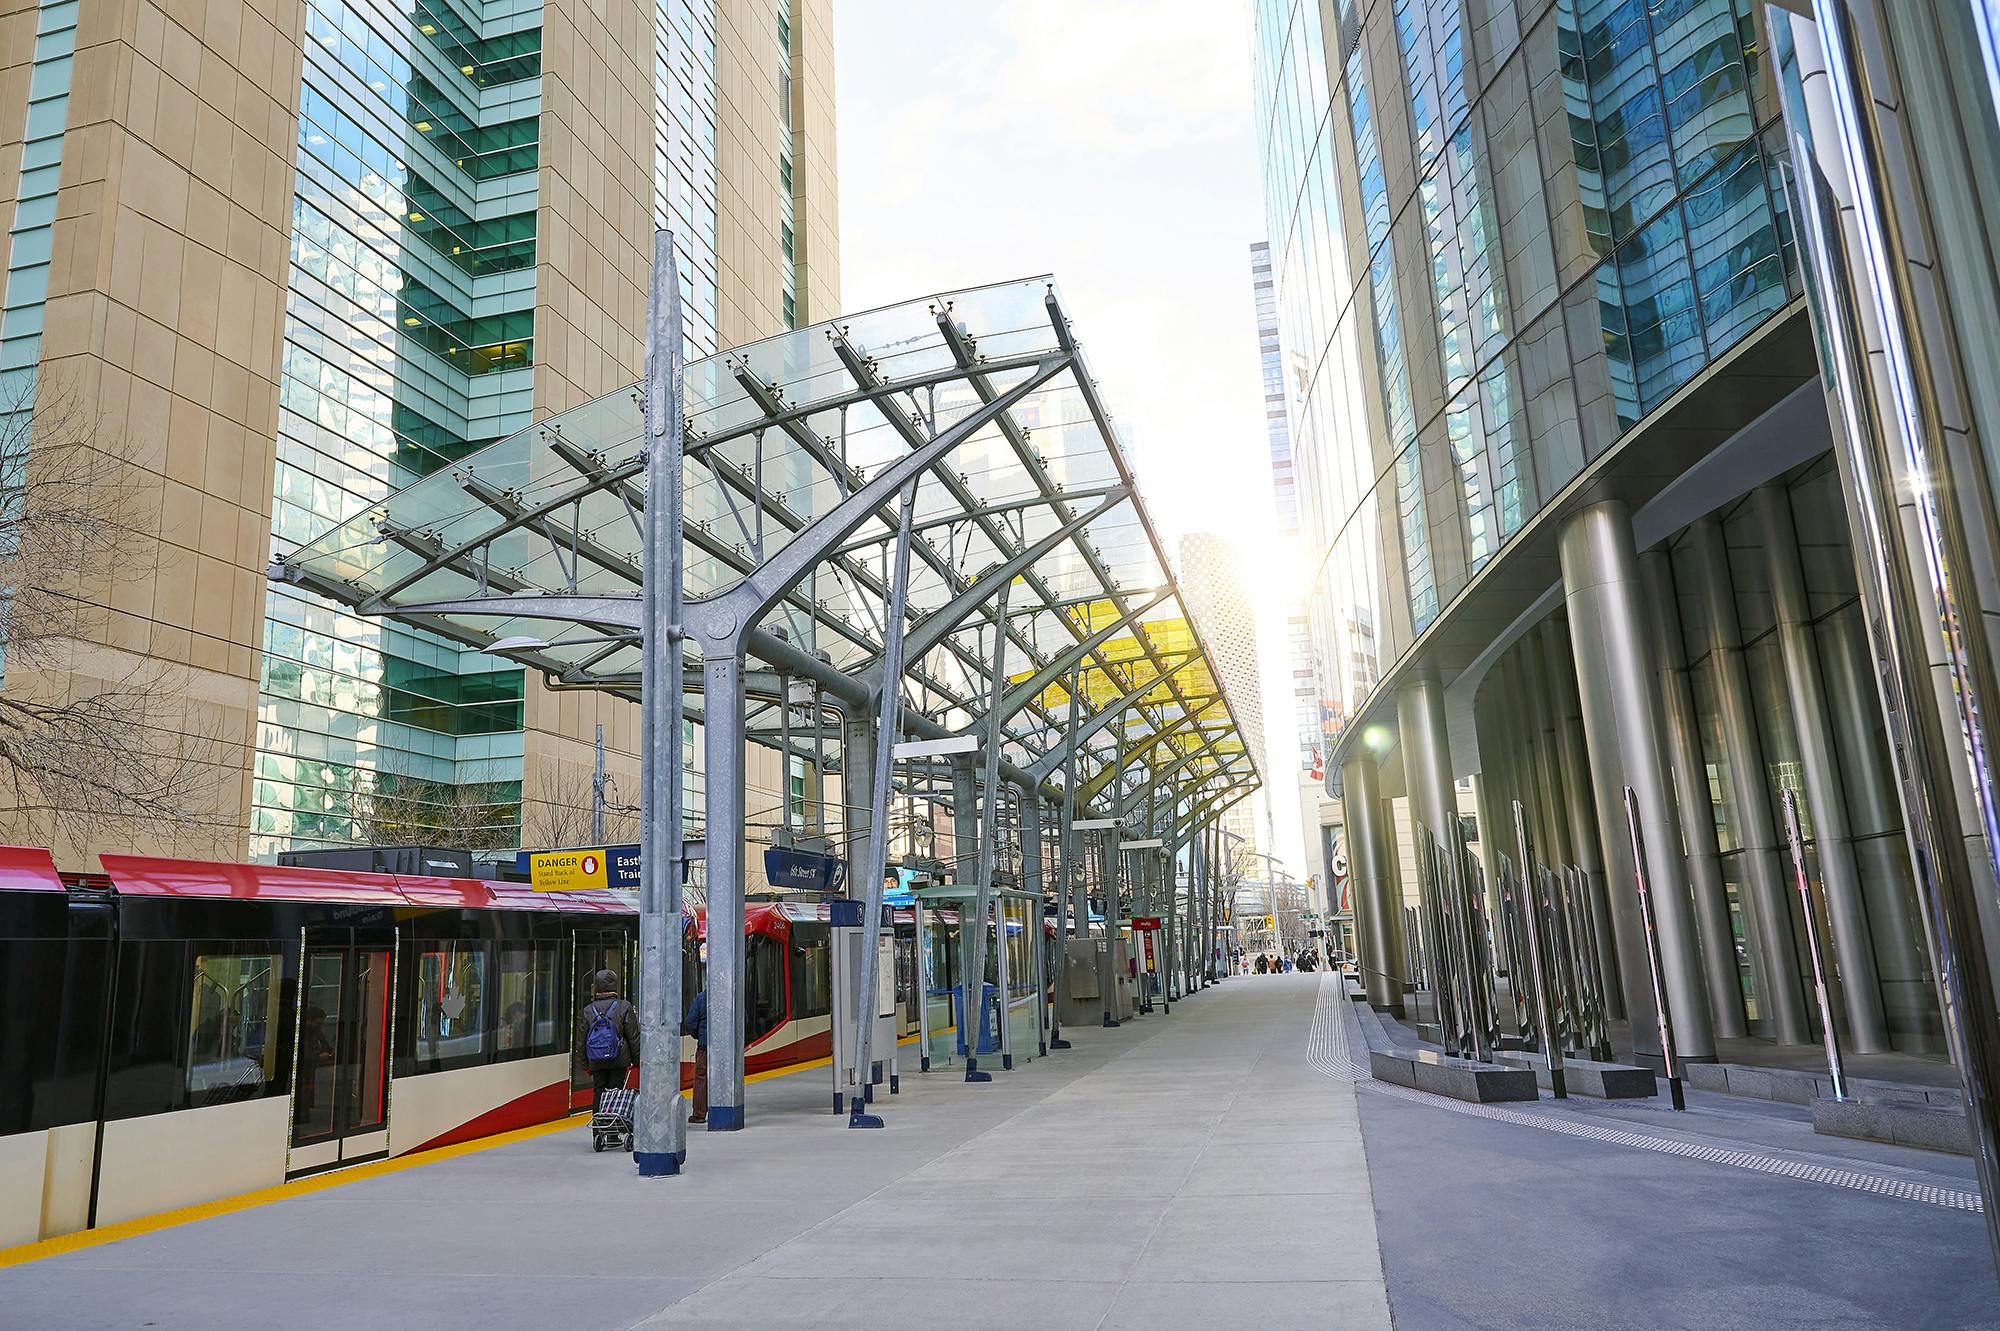 6th Street C-Train station in Calgary